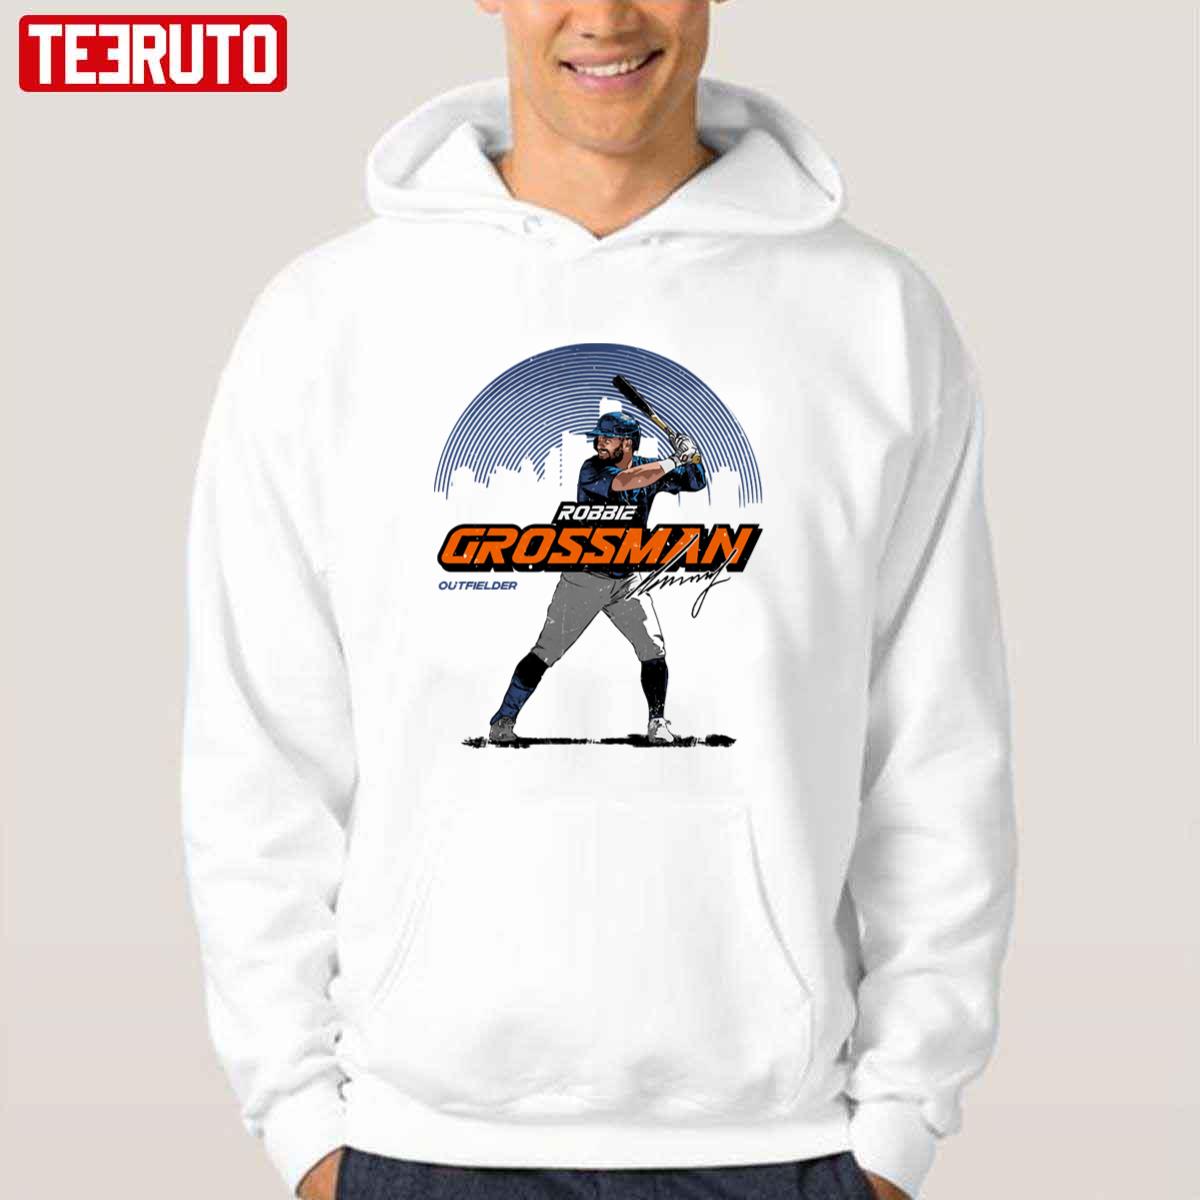 Outfielder Robbie Grossman Skyline Unisex T-Shirt